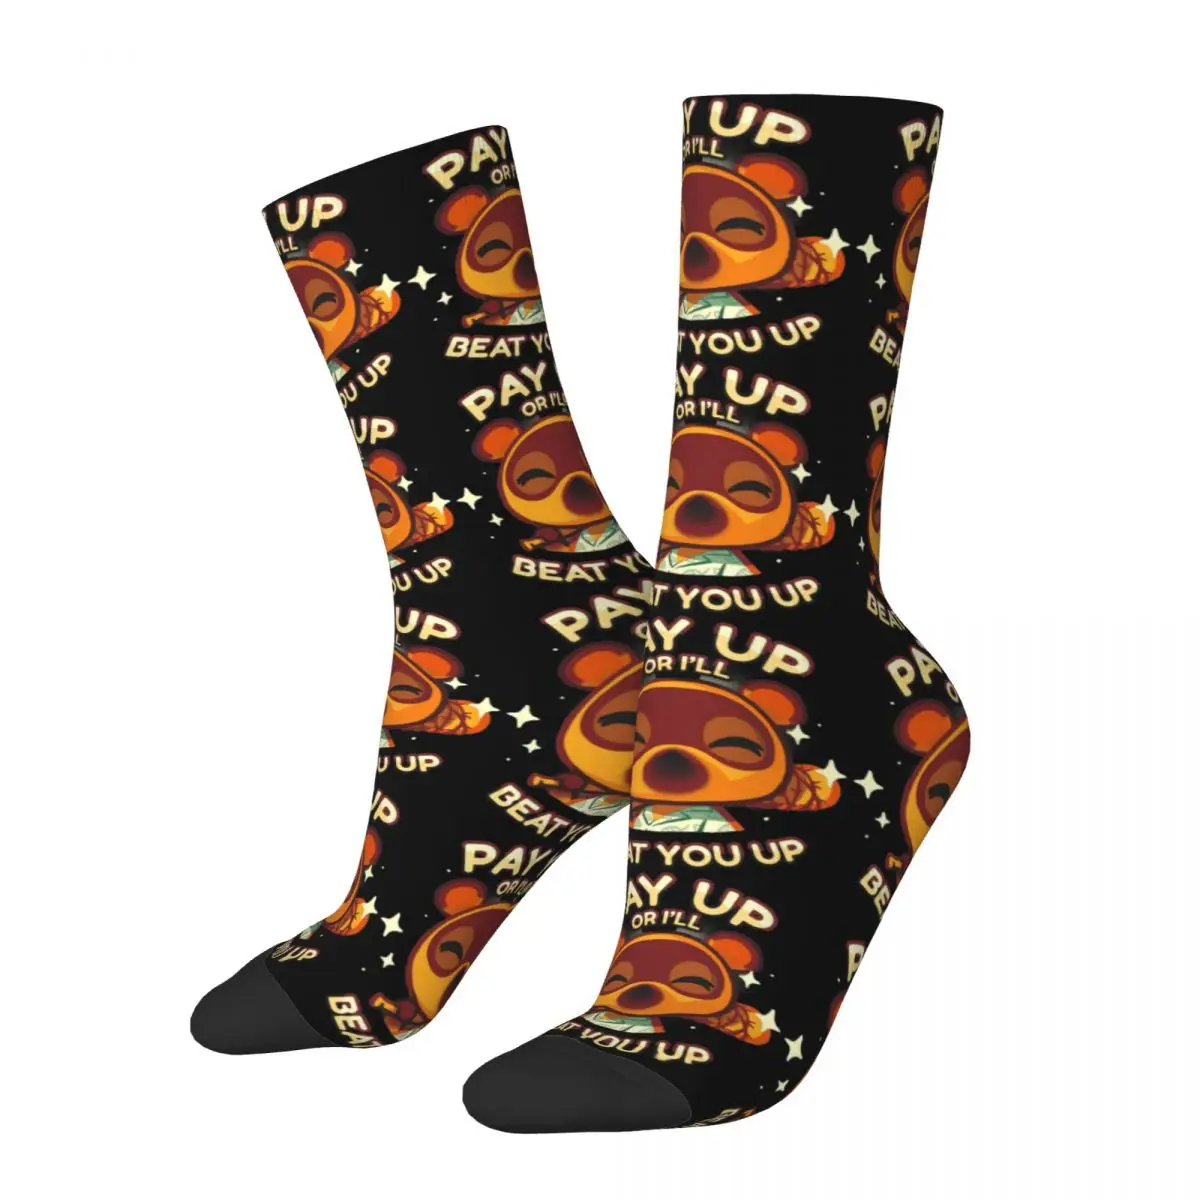 

Hip Hop Retro PAY UP Crazy Men's compression Socks Unisex Animal Crossing New Horizons Harajuku Pattern Printed Crew Sock Gift